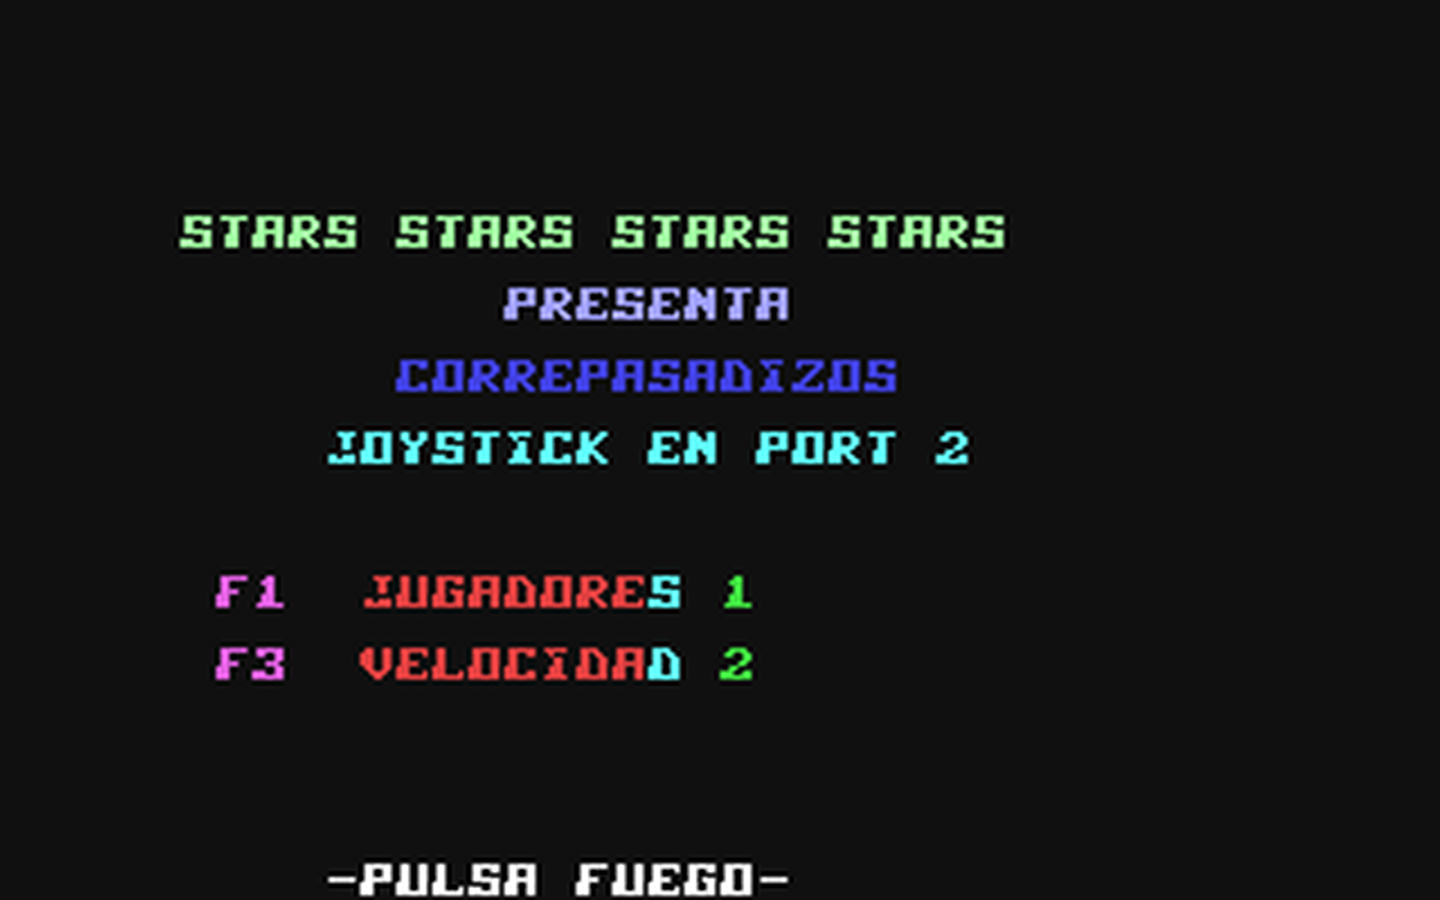 C64 GameBase Correpasadizos Microjet/STARS_Commodore 1985